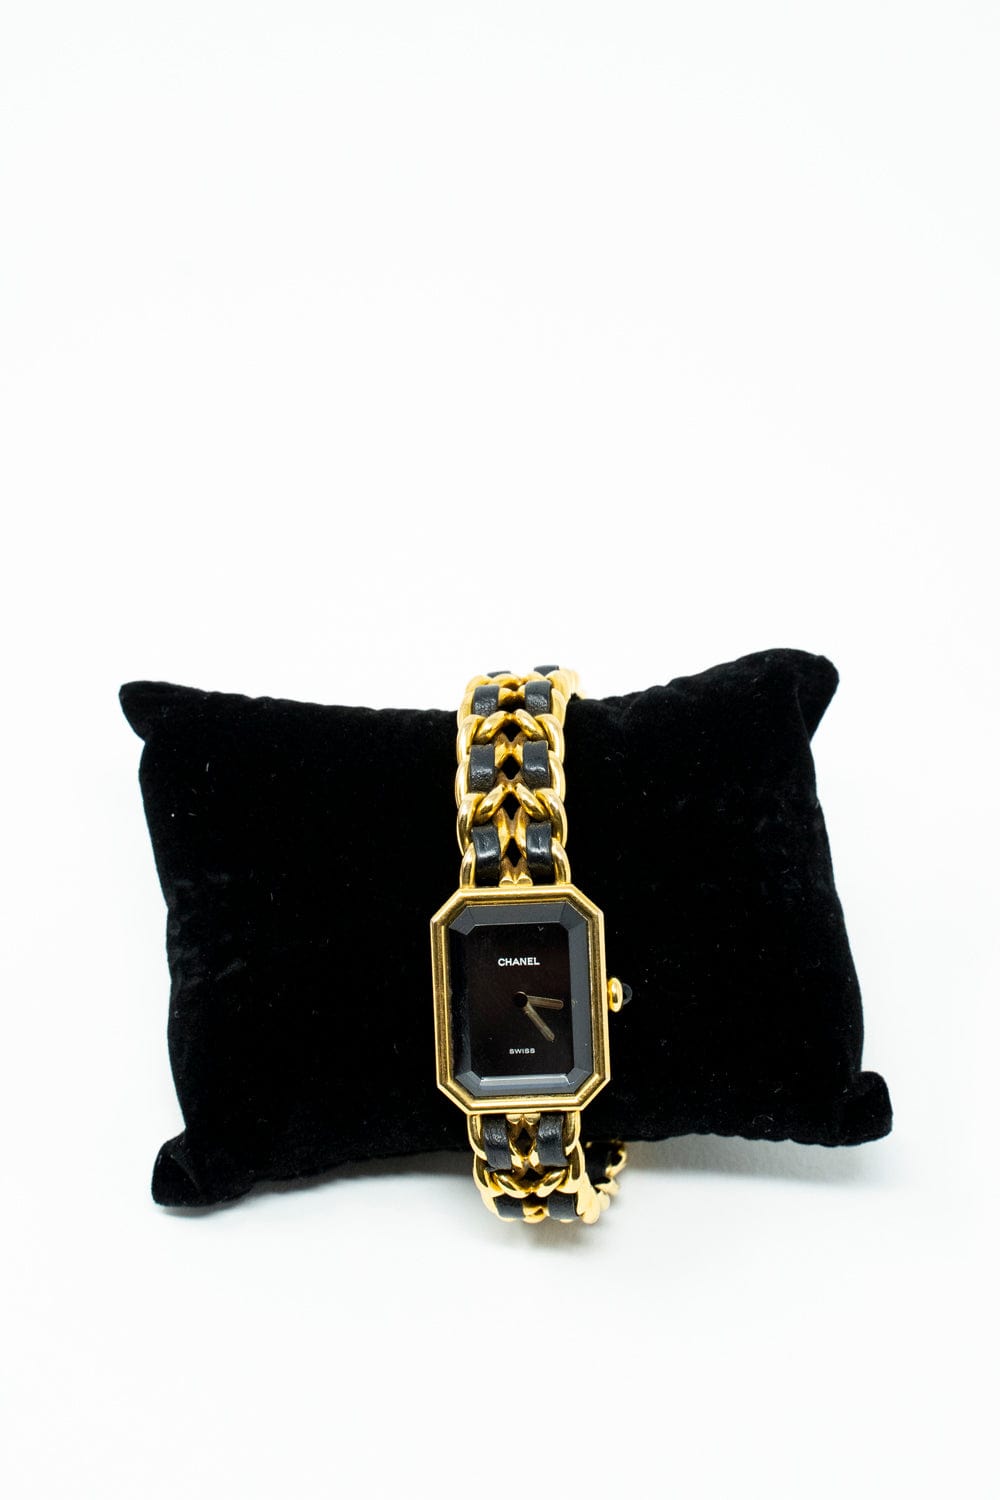 Chanel Chanel premier watch M size - AWL2578